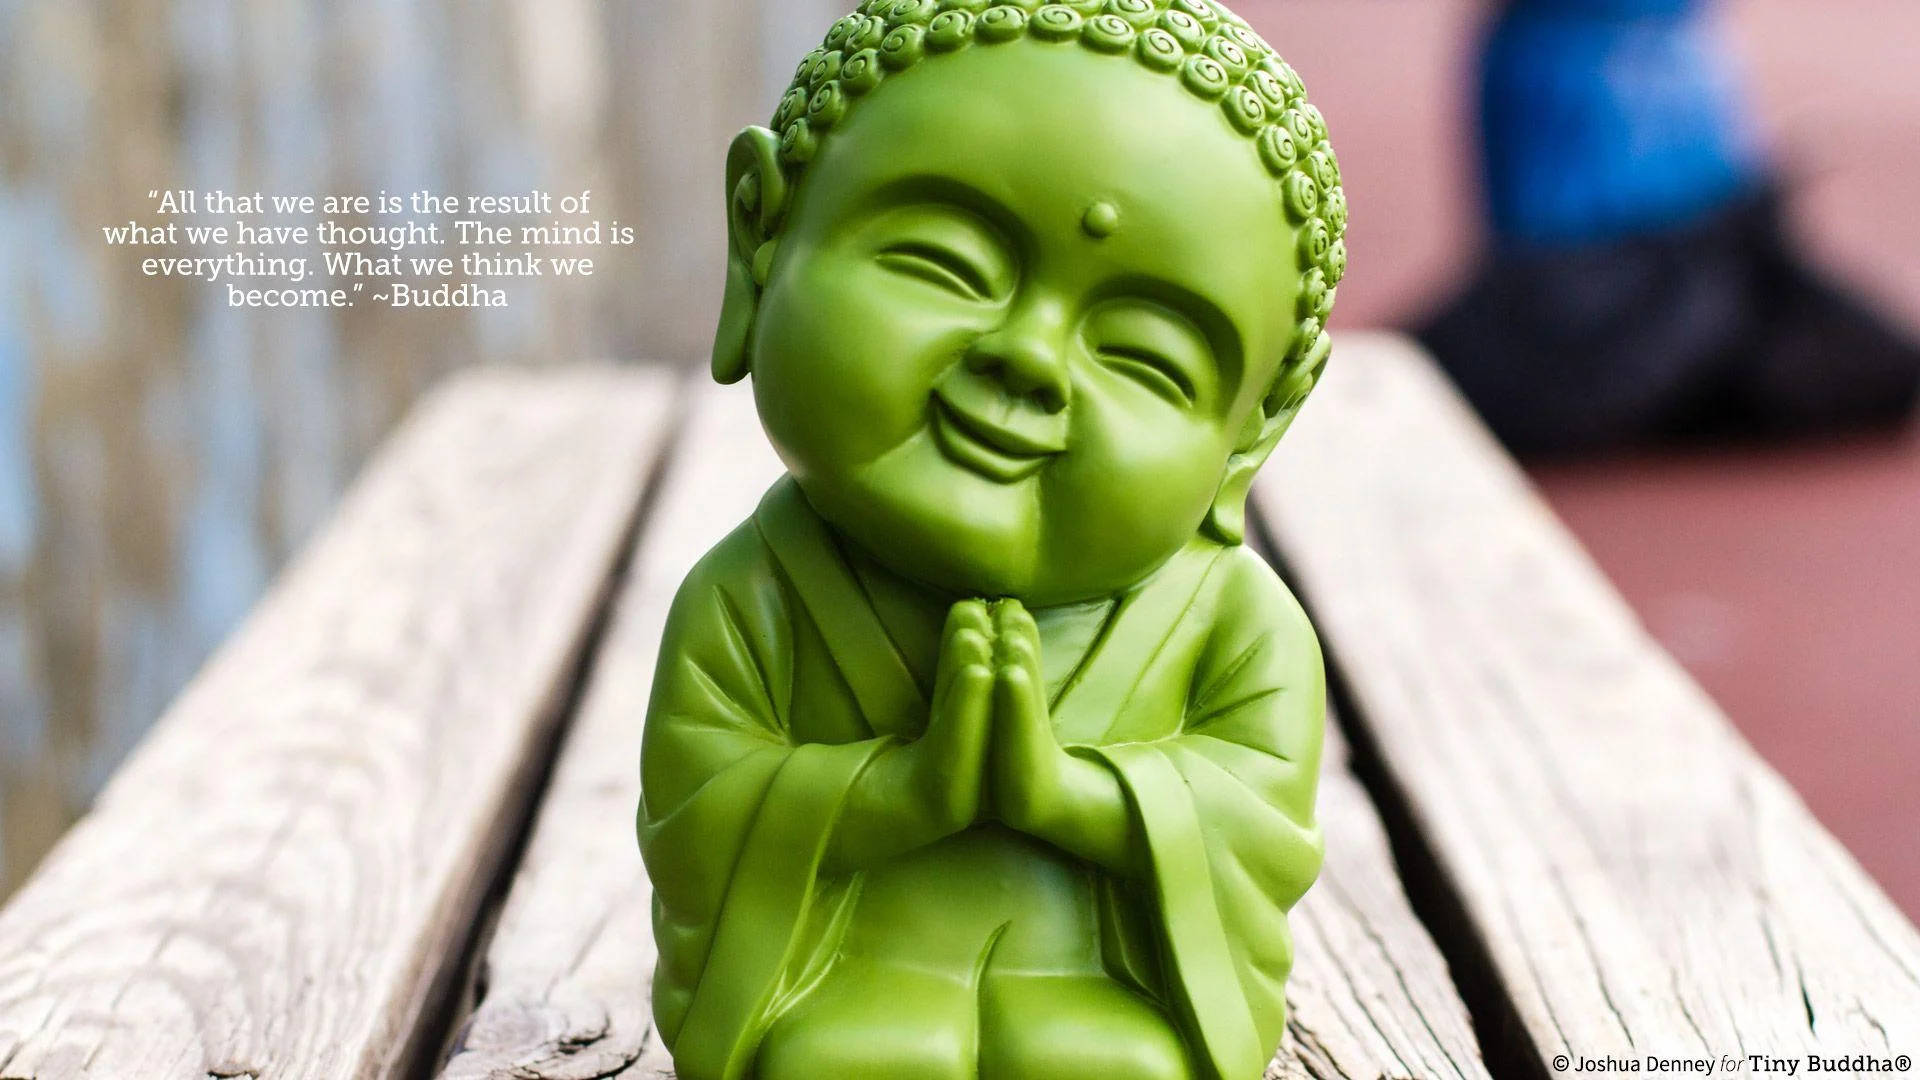 Green Laughing Buddha Figurine Wallpaper